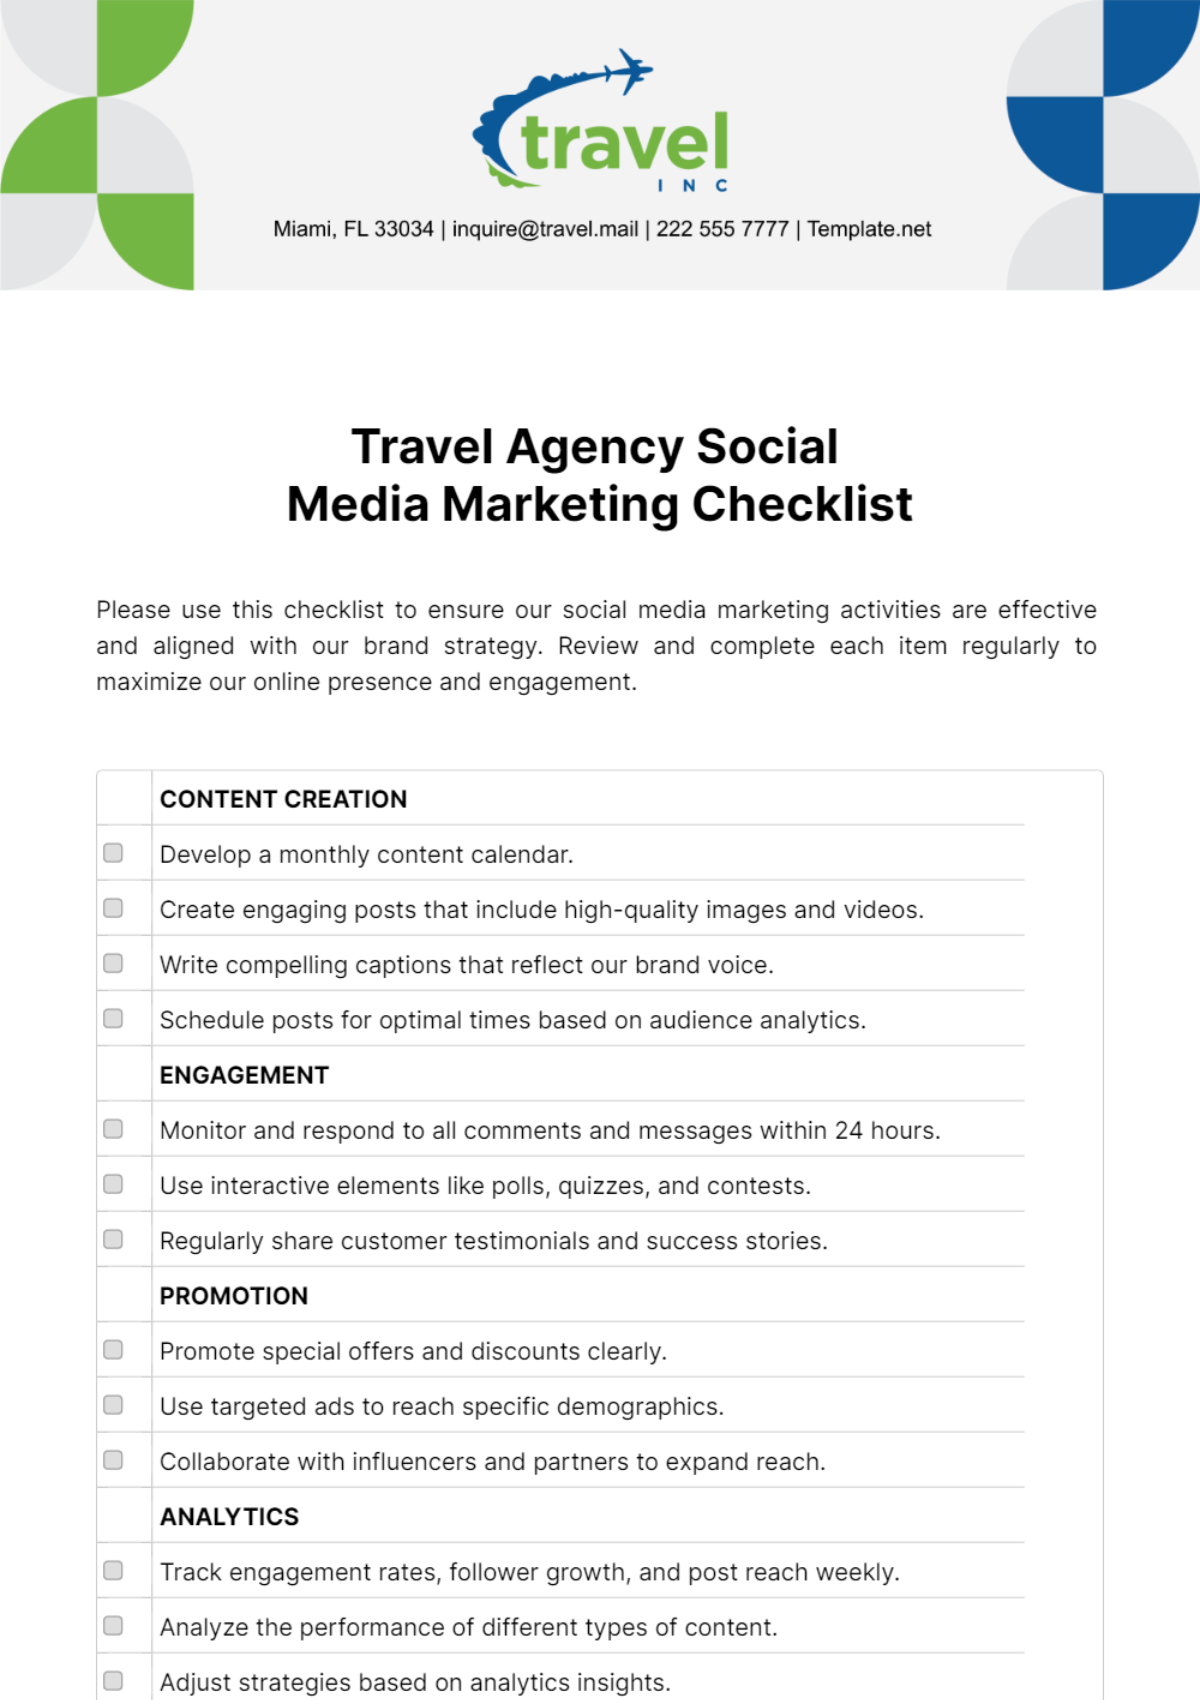 Free Travel Agency Social Media Marketing Checklist Template